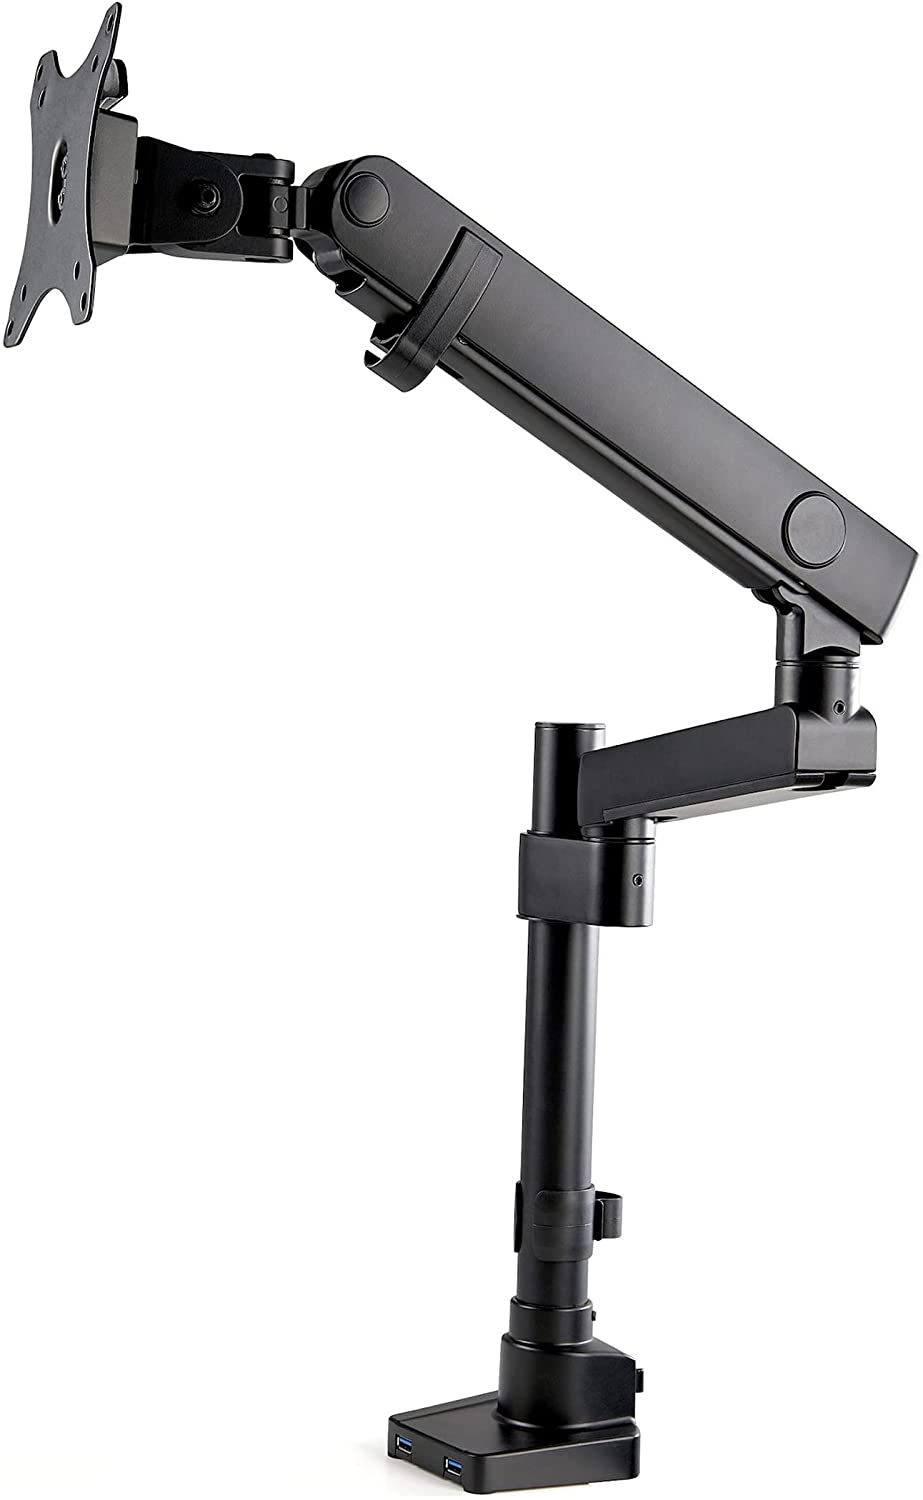 StarTech.com Desk Mount Monitor Arm with 2x USB 3.0 Ports - Pole Mount Full Motion Single Arm Monitor Mount, up to 8kg VESA Display - Ergonomic Articulating Monitor Arm - Clamp/Grommet (ARMPIVOT2USB3)